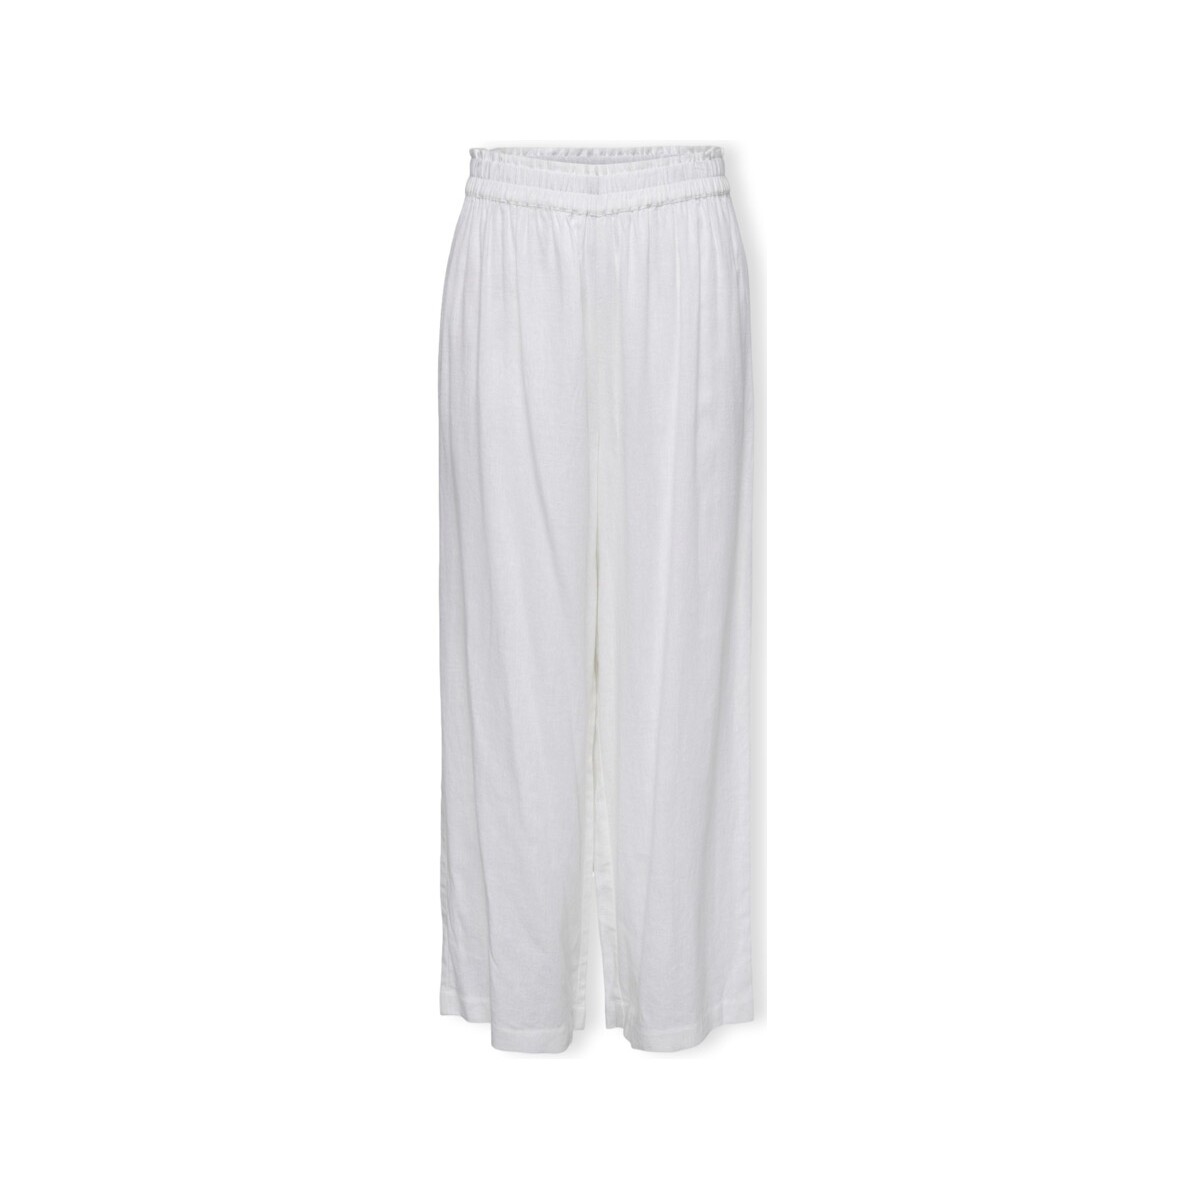 Kleidung Damen Hosen Only Noos Tokyo Linen Trousers - Bright White Weiss